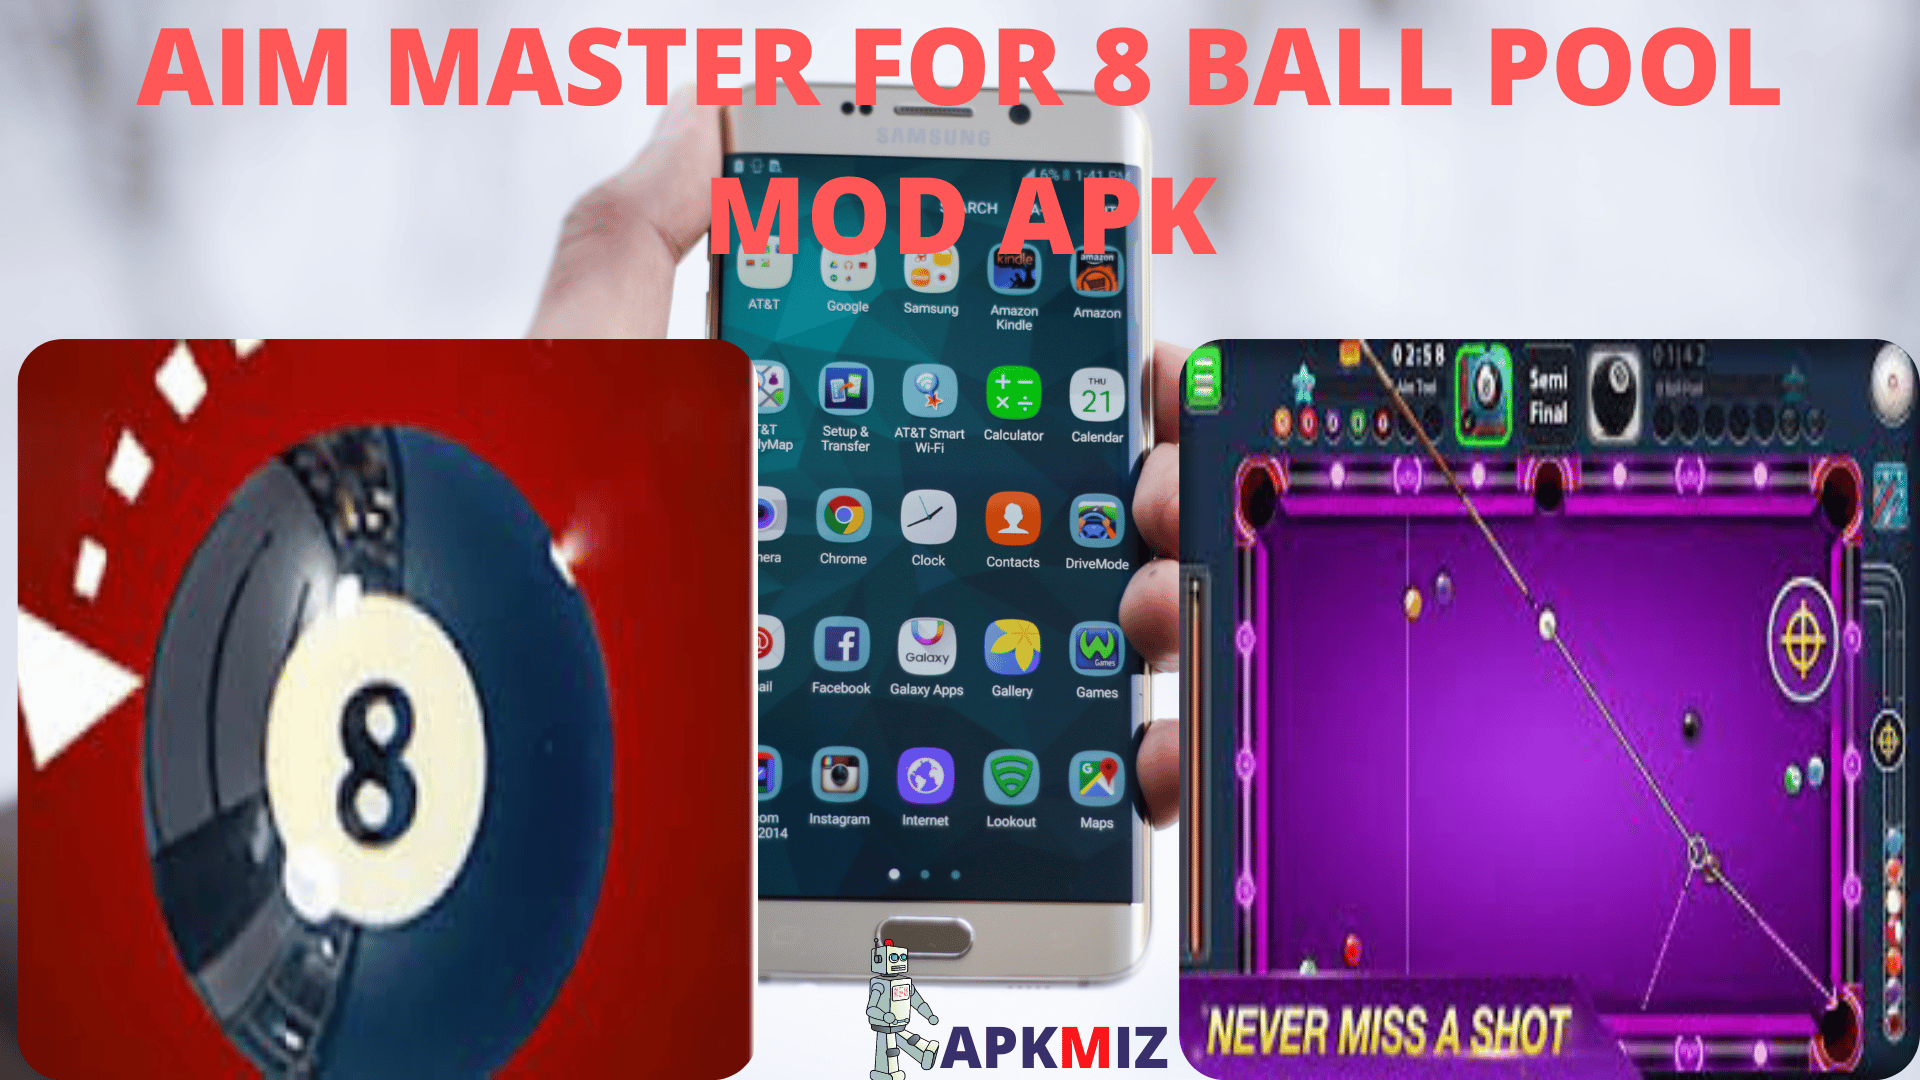 Aim Master for 8 Ball Pool Mod Apk